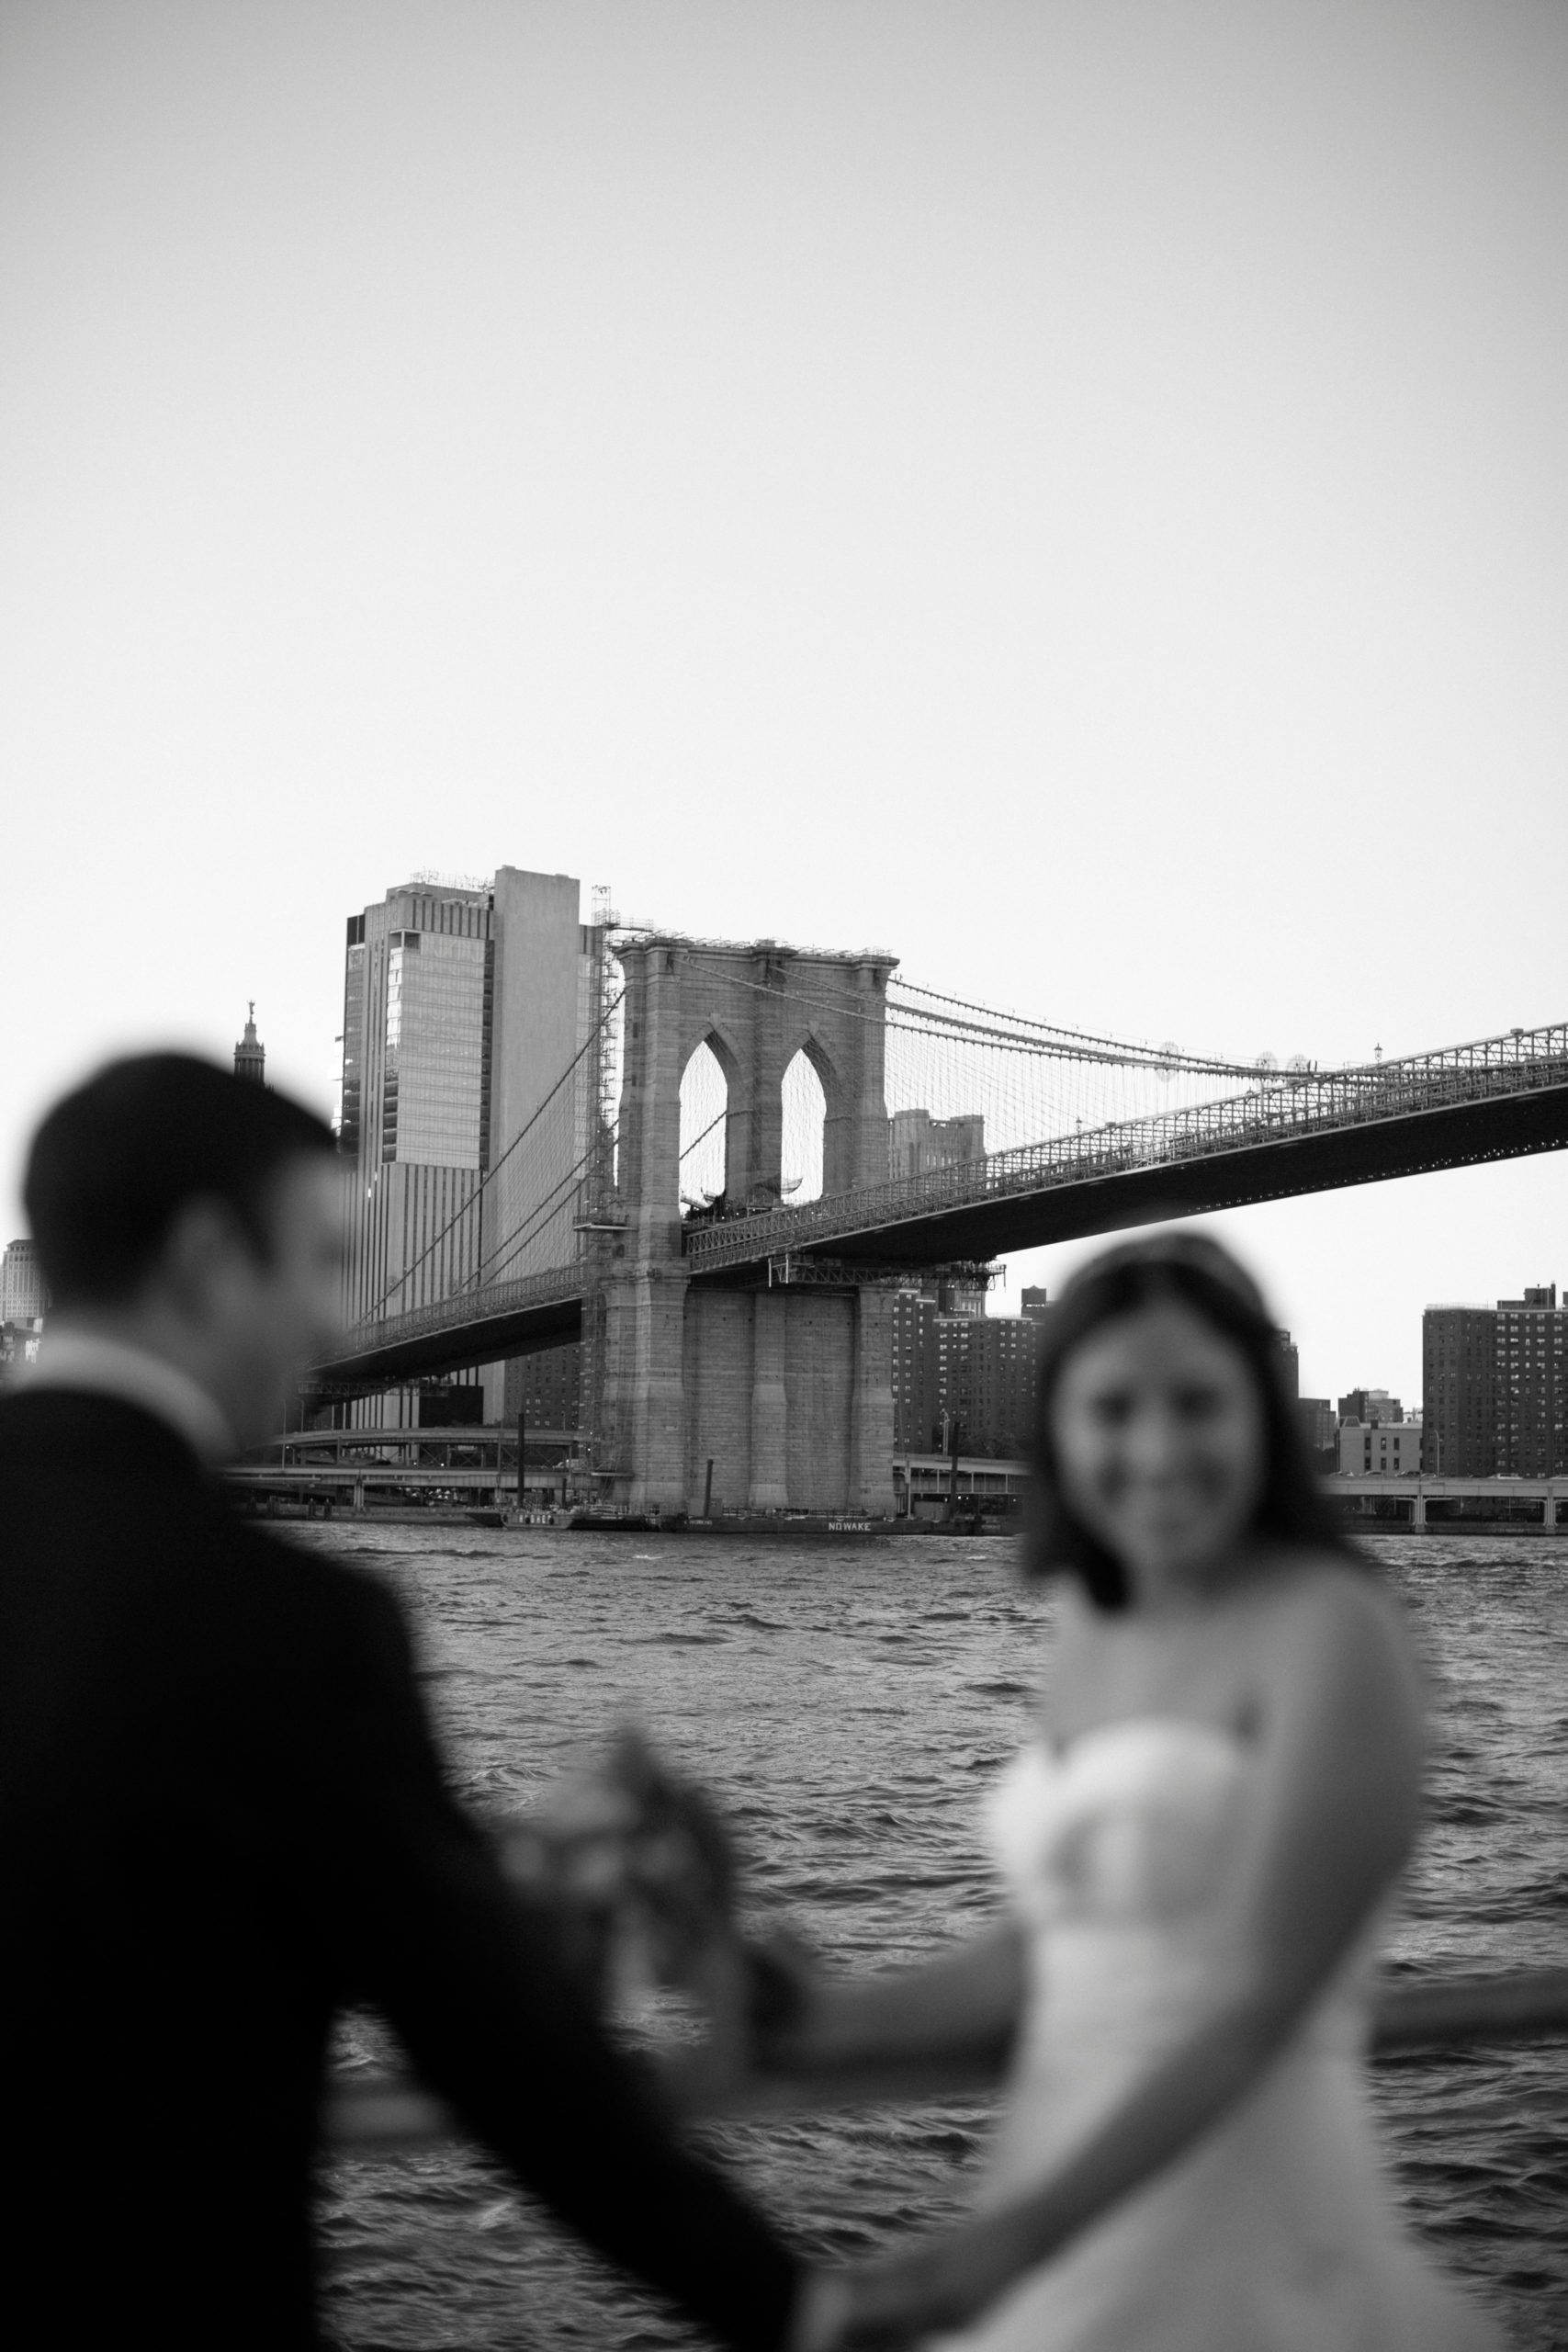 The River Cafe Wedding, Brooklyn New York Wedding, Captured by Brooklyn New York Wedding Photographer Janae Rose Photography